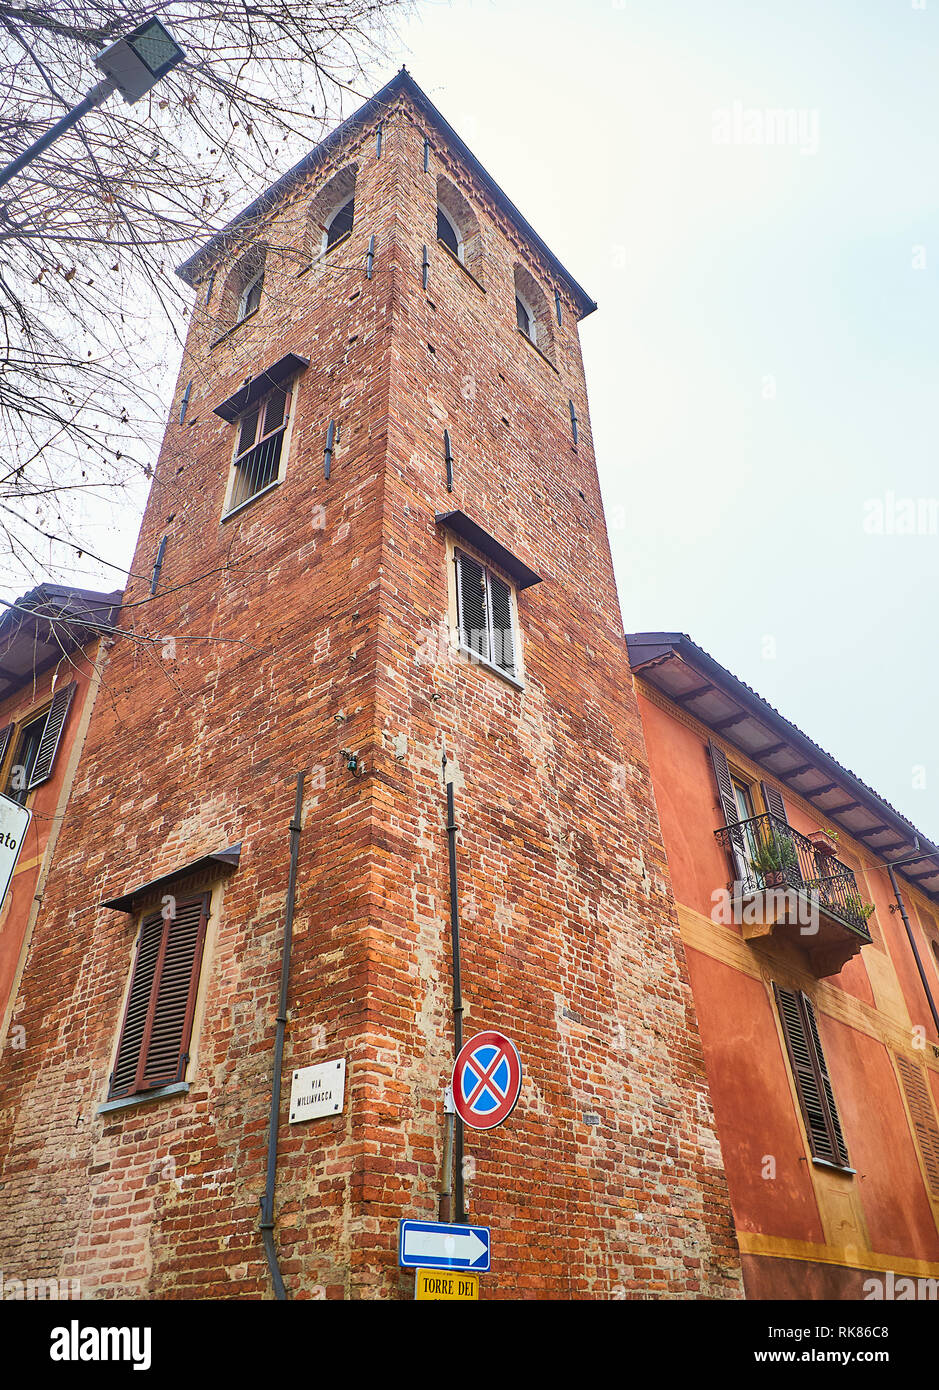 Asti, Italien - 1. Januar 2019. Torre dei Natta Tower. Blick von der Via Milliavacca mit Via Natta Ecke. Asti, Piemont, Italien. Stockfoto